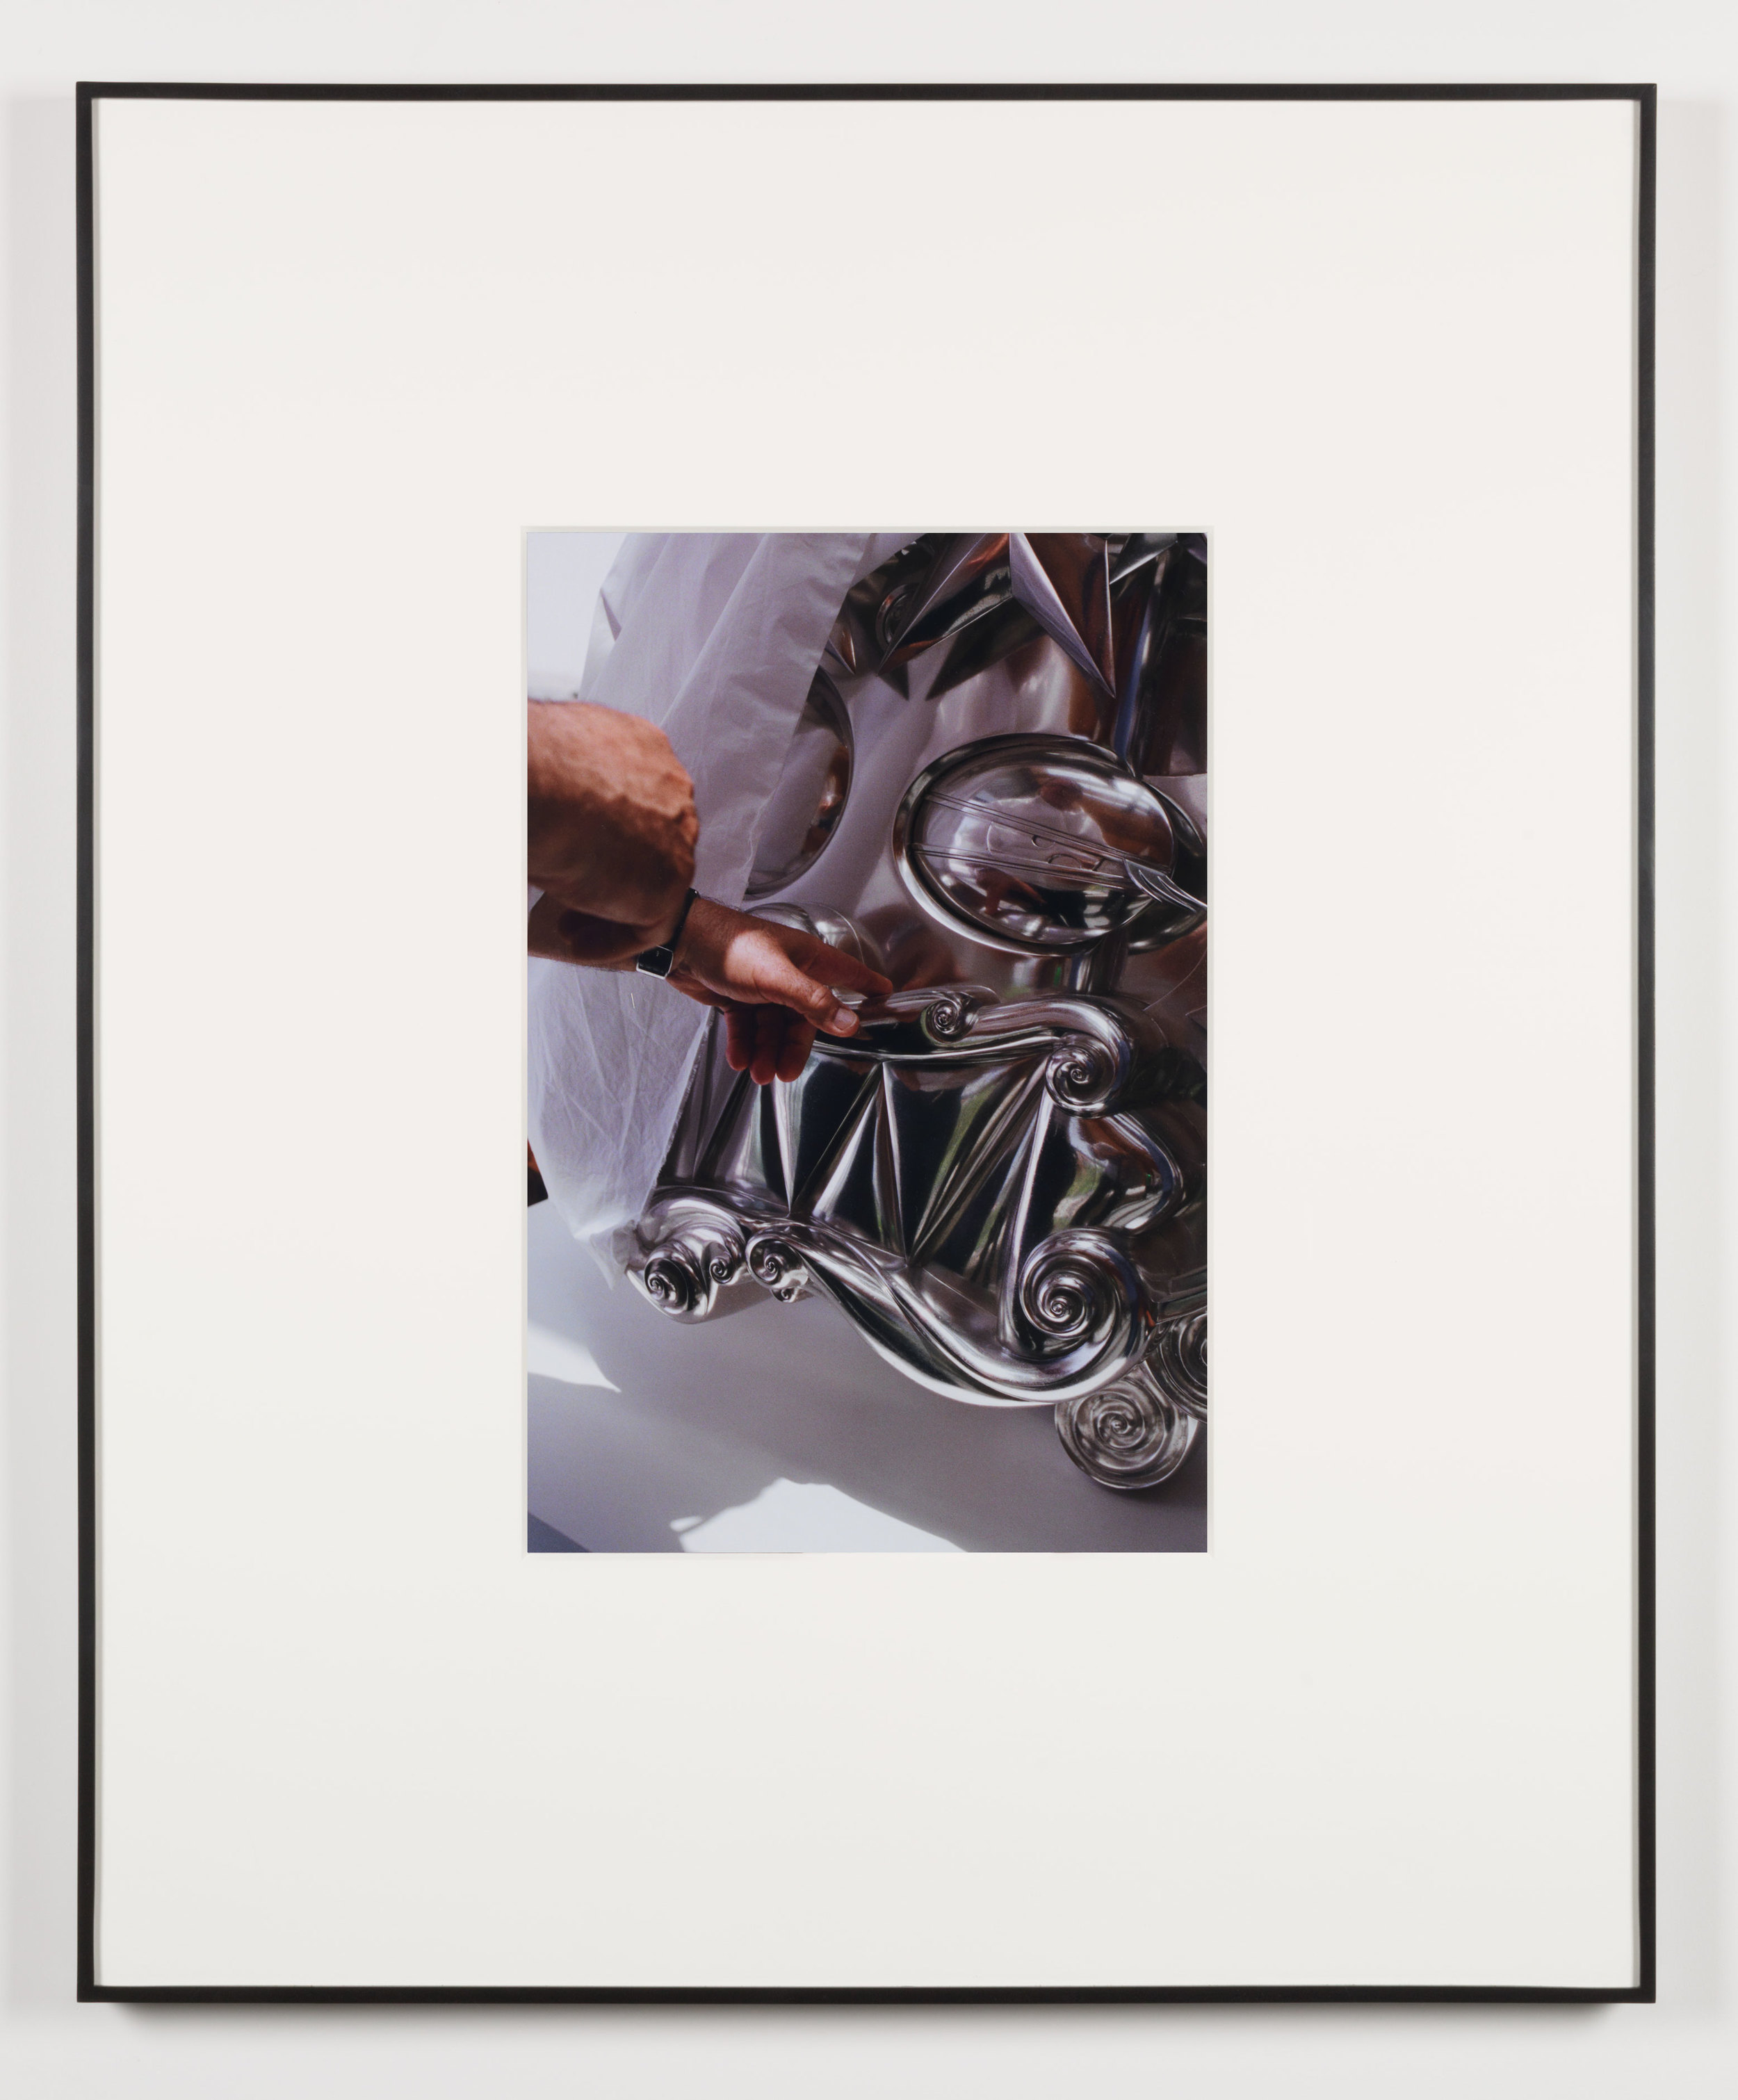   Die Supermutter (Beirut, Lebanon, June 1, 2013), Frame No. 15    2014   Chromogenic print  35 7/8 x 29 1/2 inches  Exhibition:   Gastarbeiten, 2014  